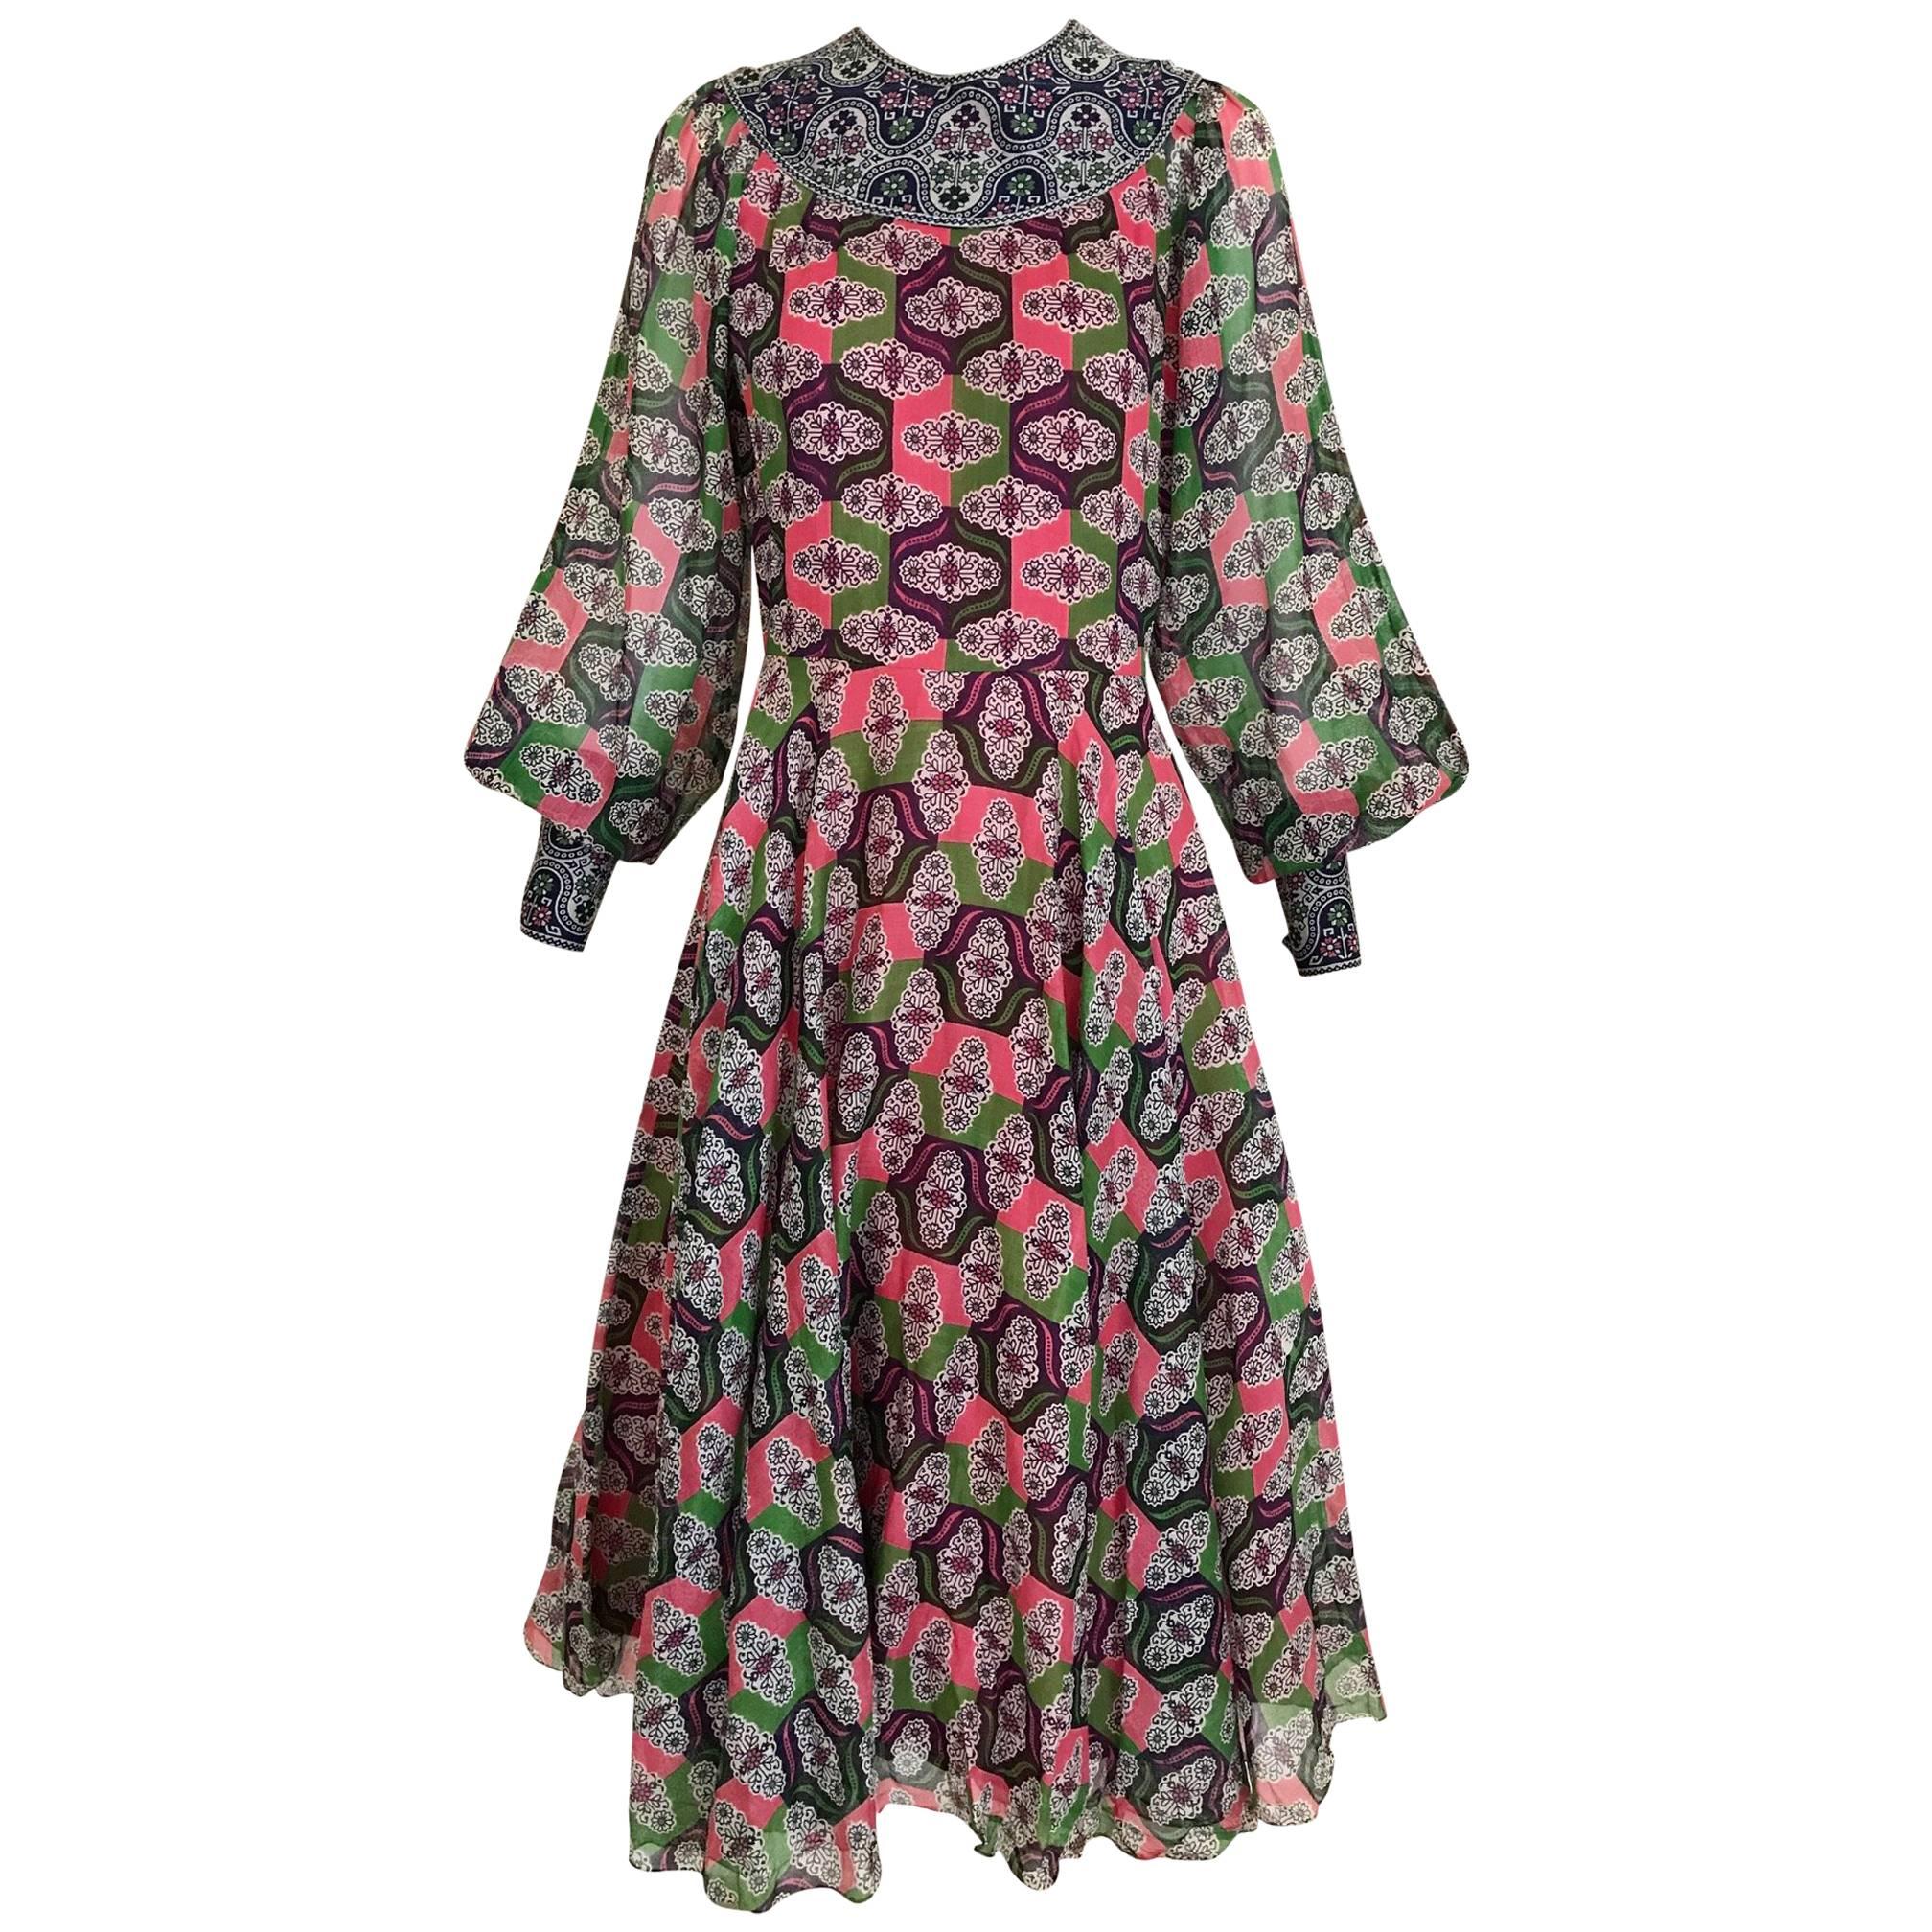  1970s Indian Print Multi Color Cotton 70s vintage Summer dress